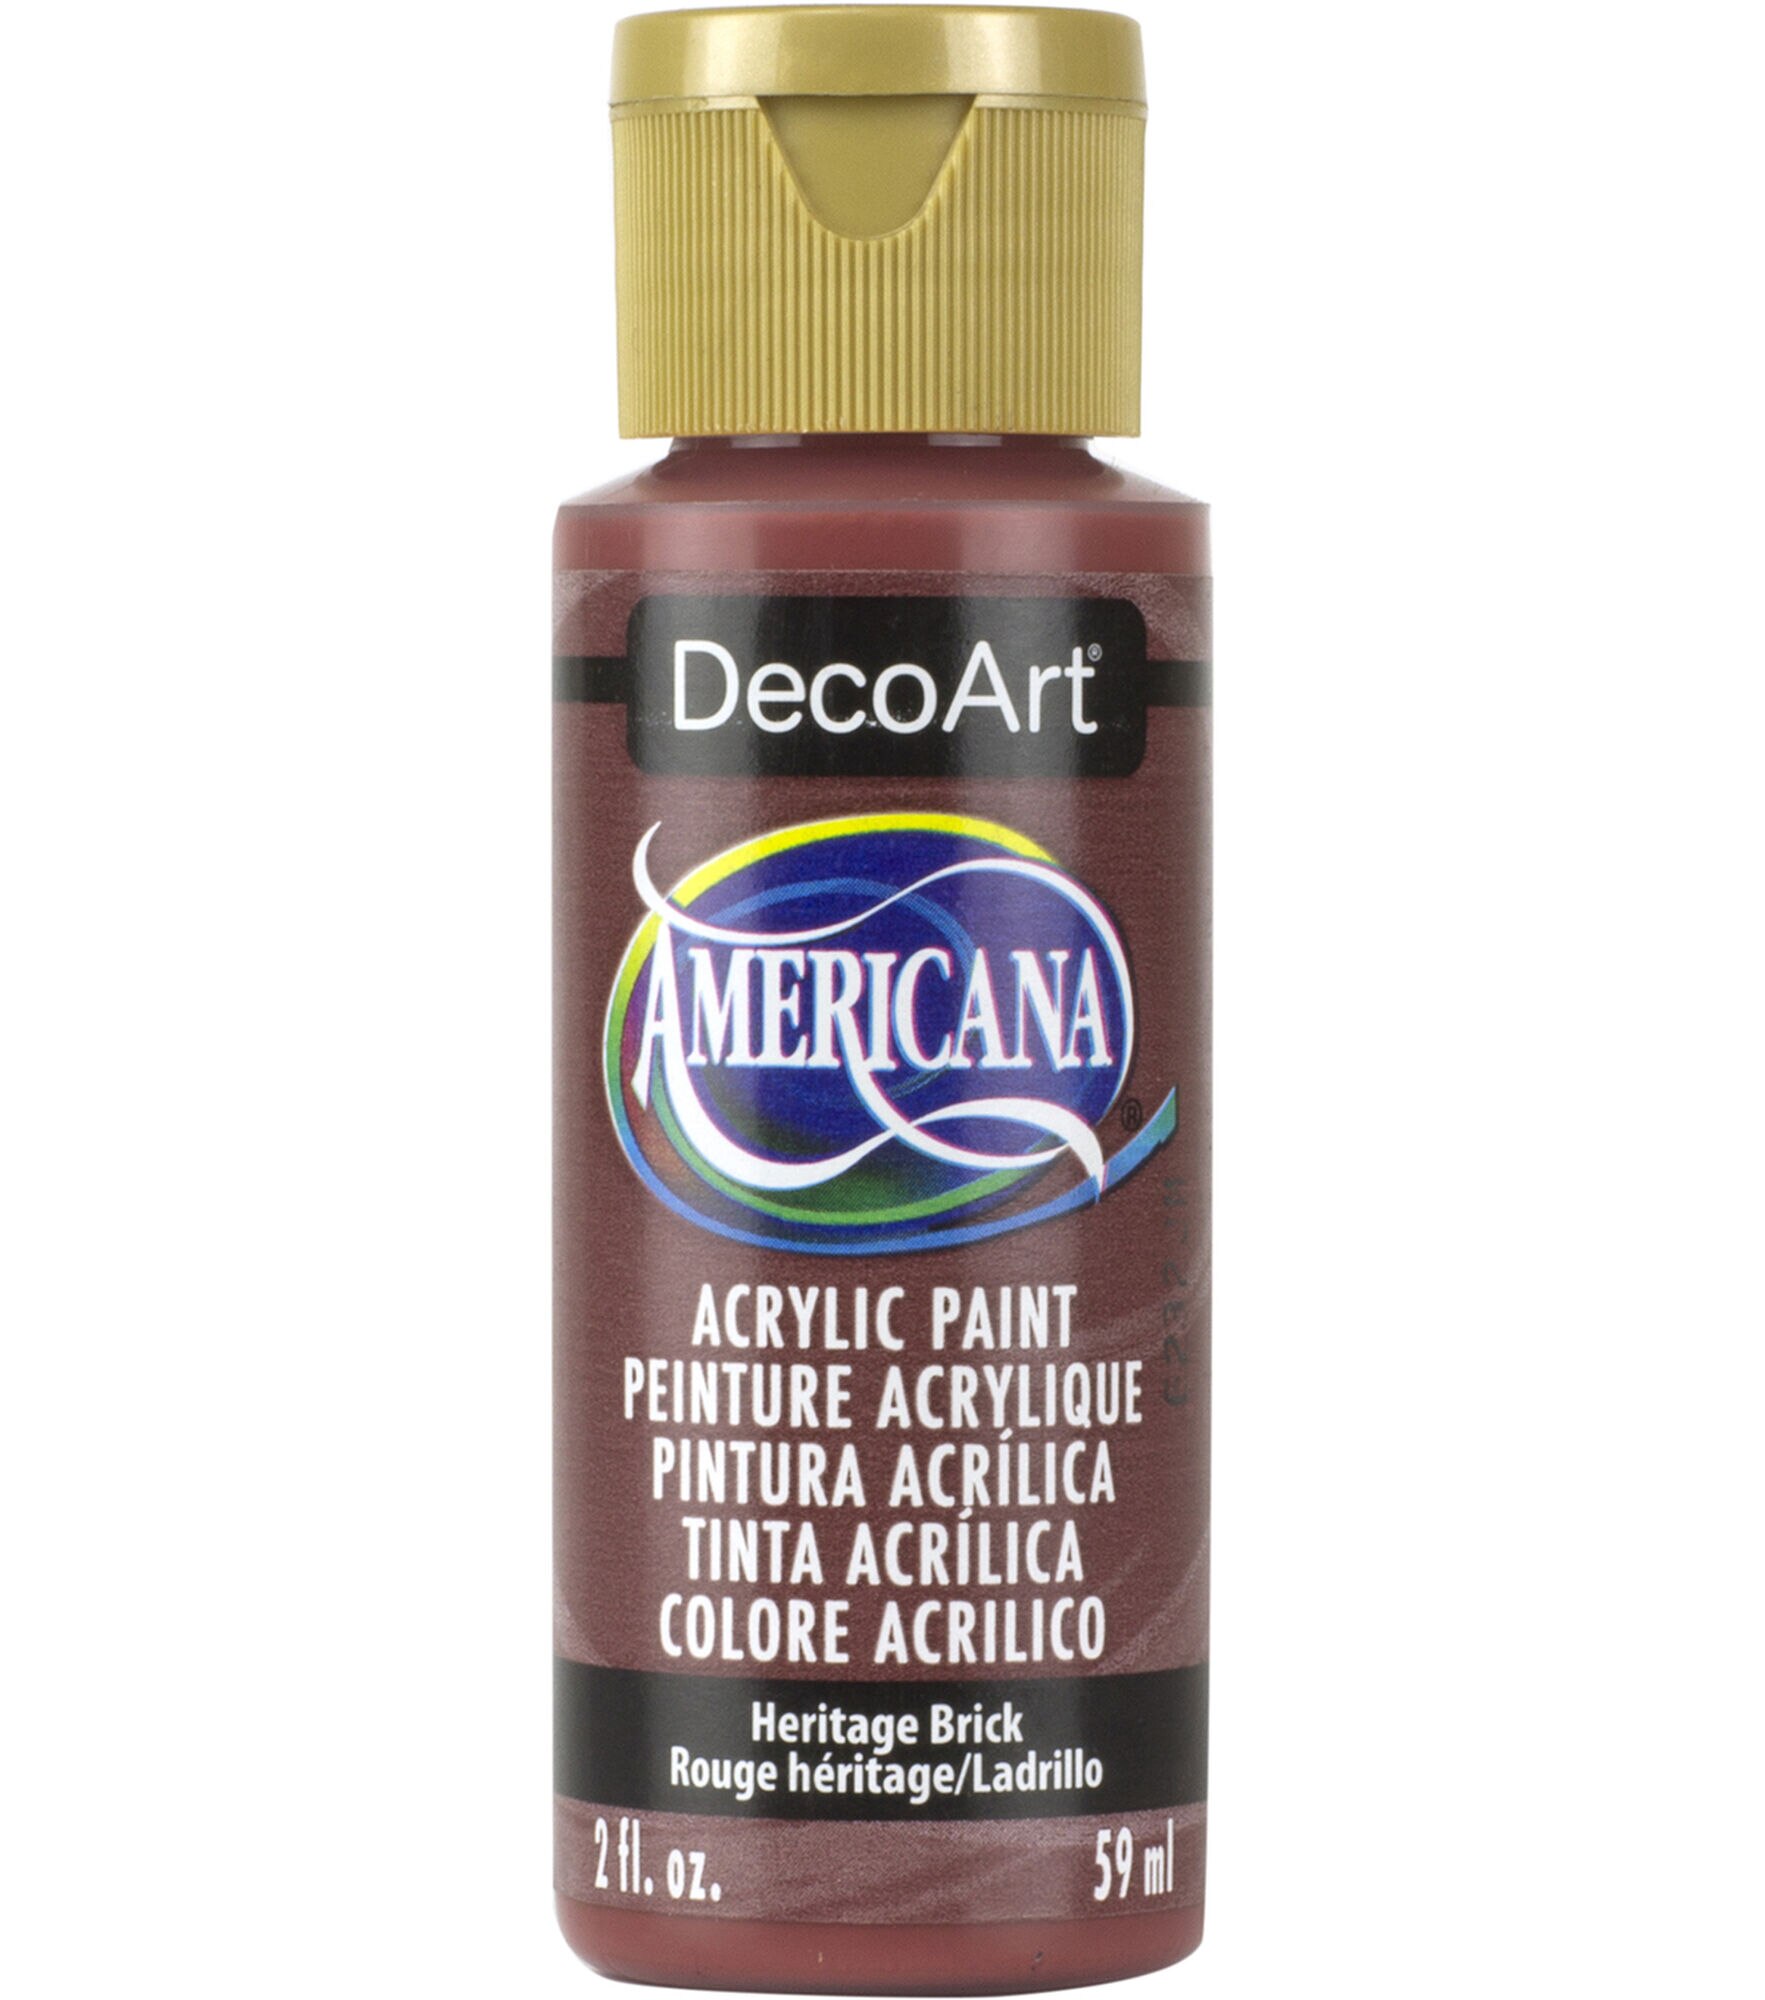 DecoArt Americana Acrylic 2oz Paint, Heritage Brick, hi-res